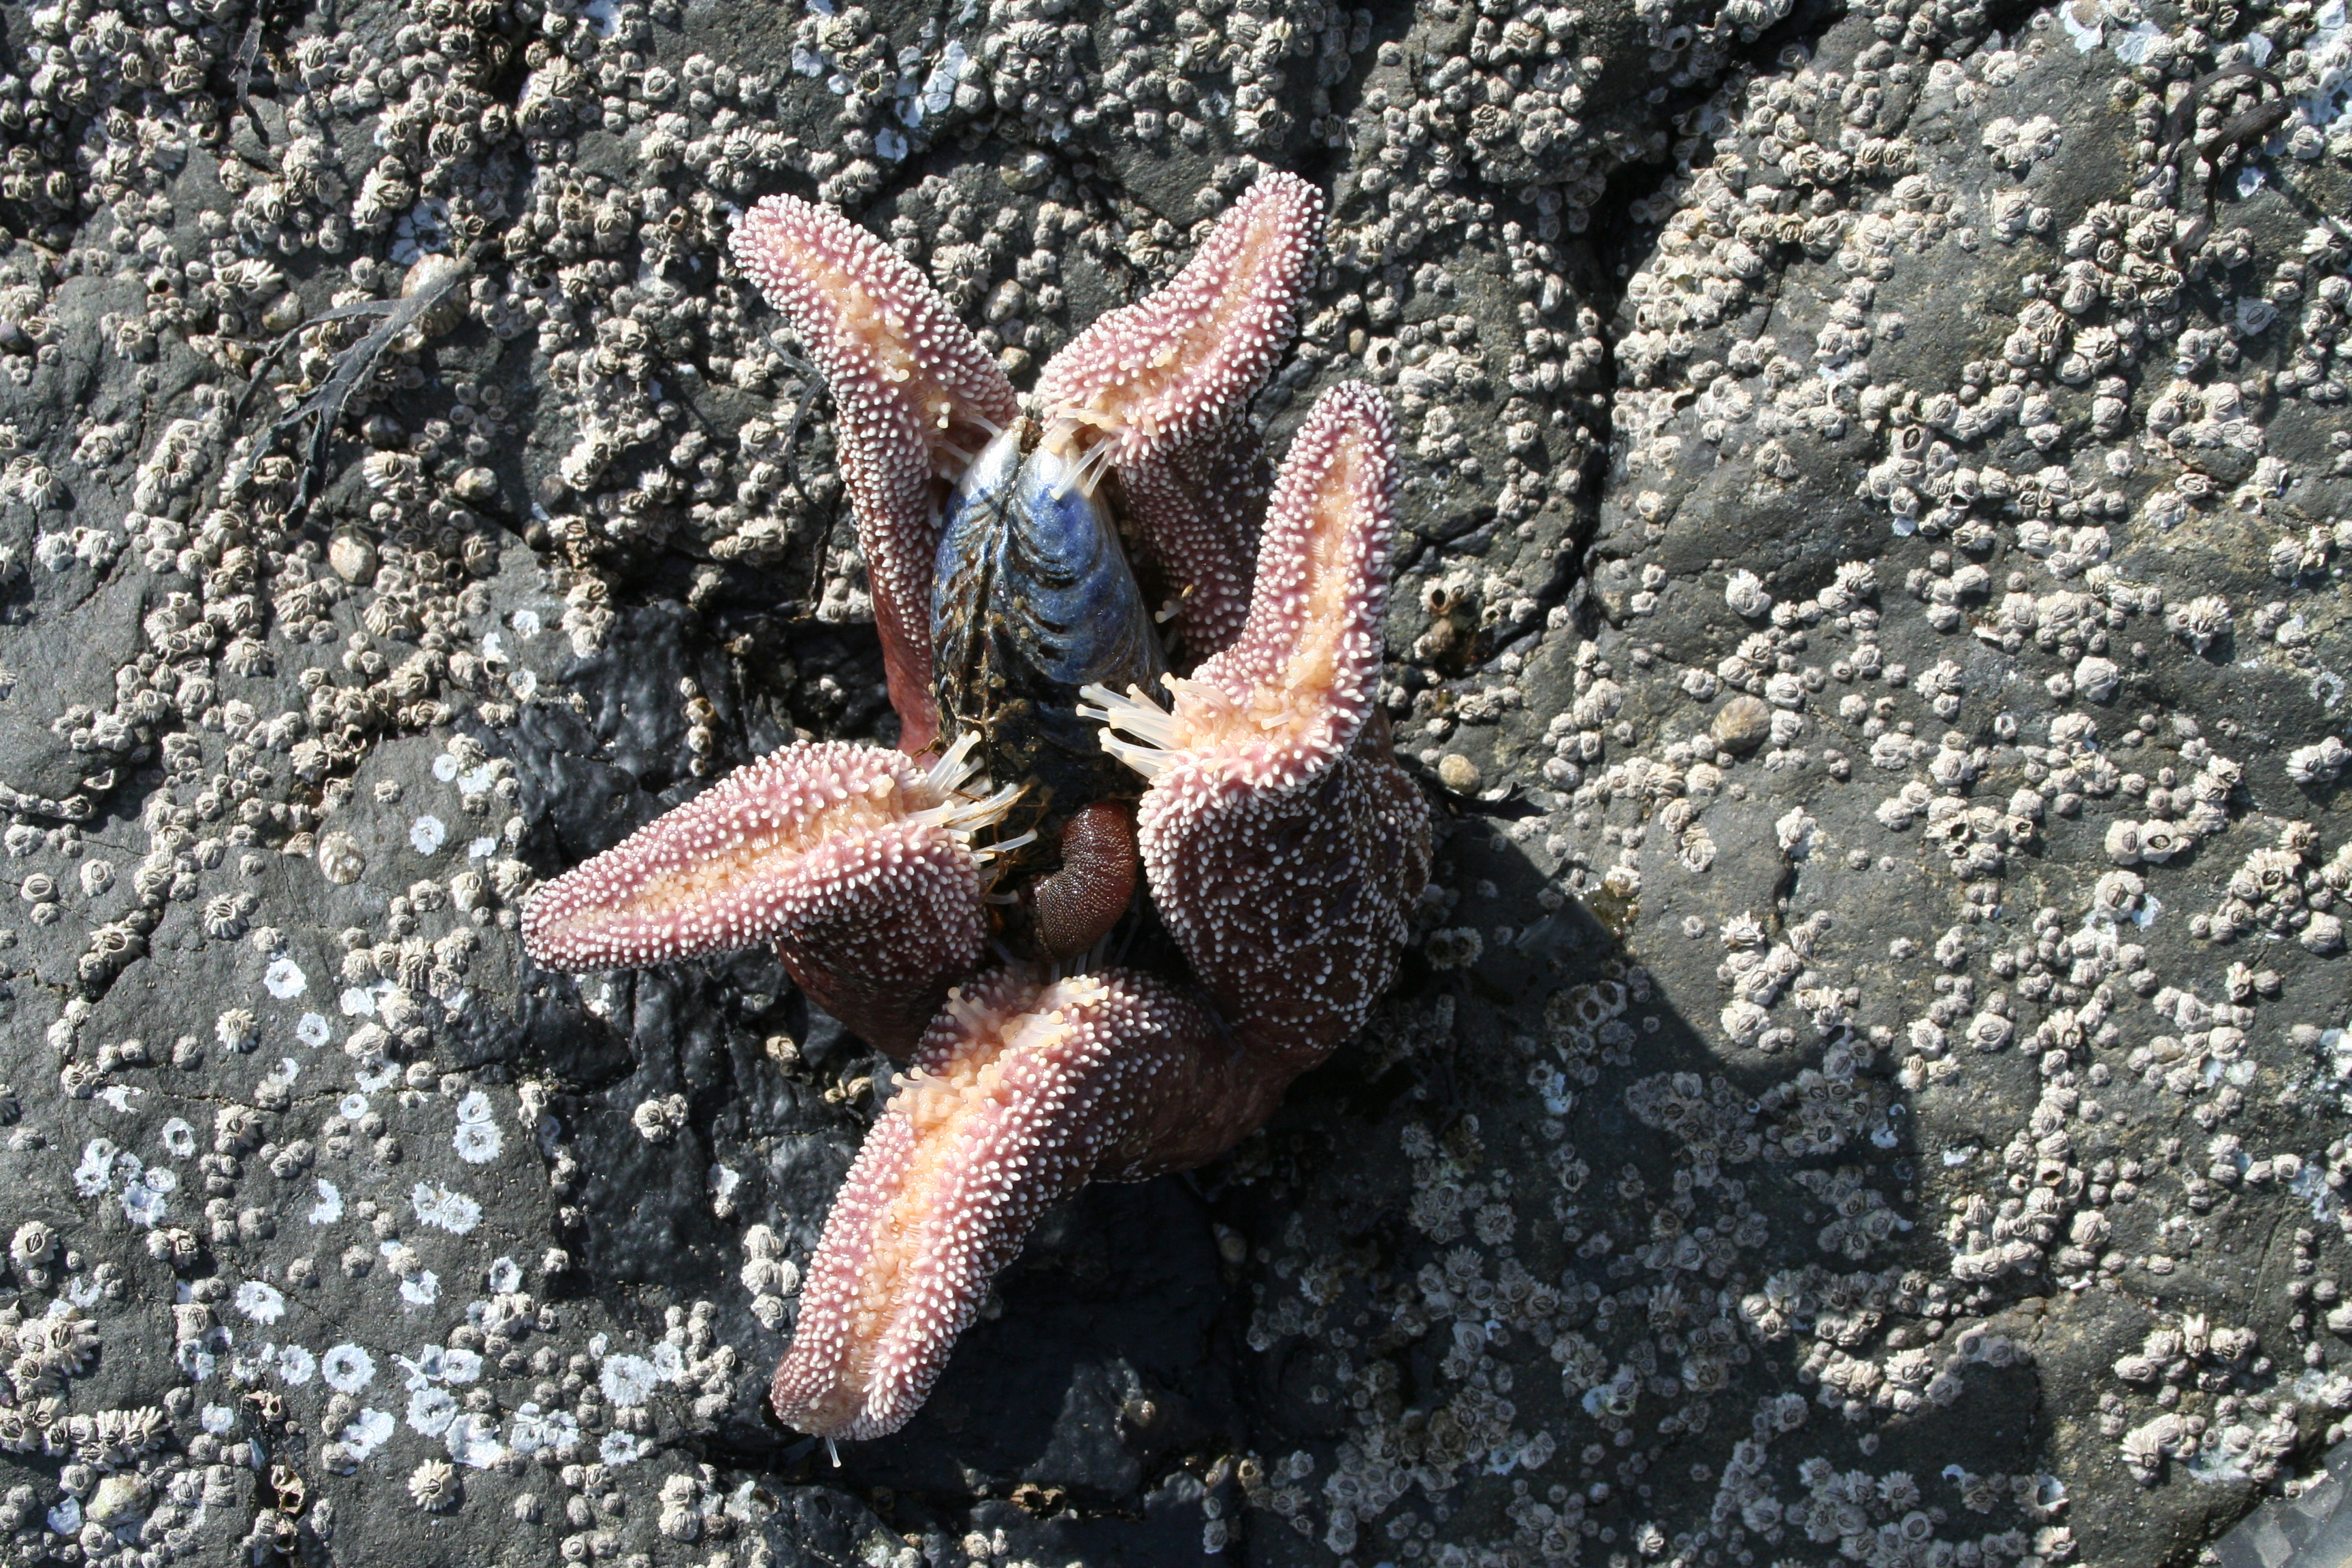 A starfish enjoying a meal.